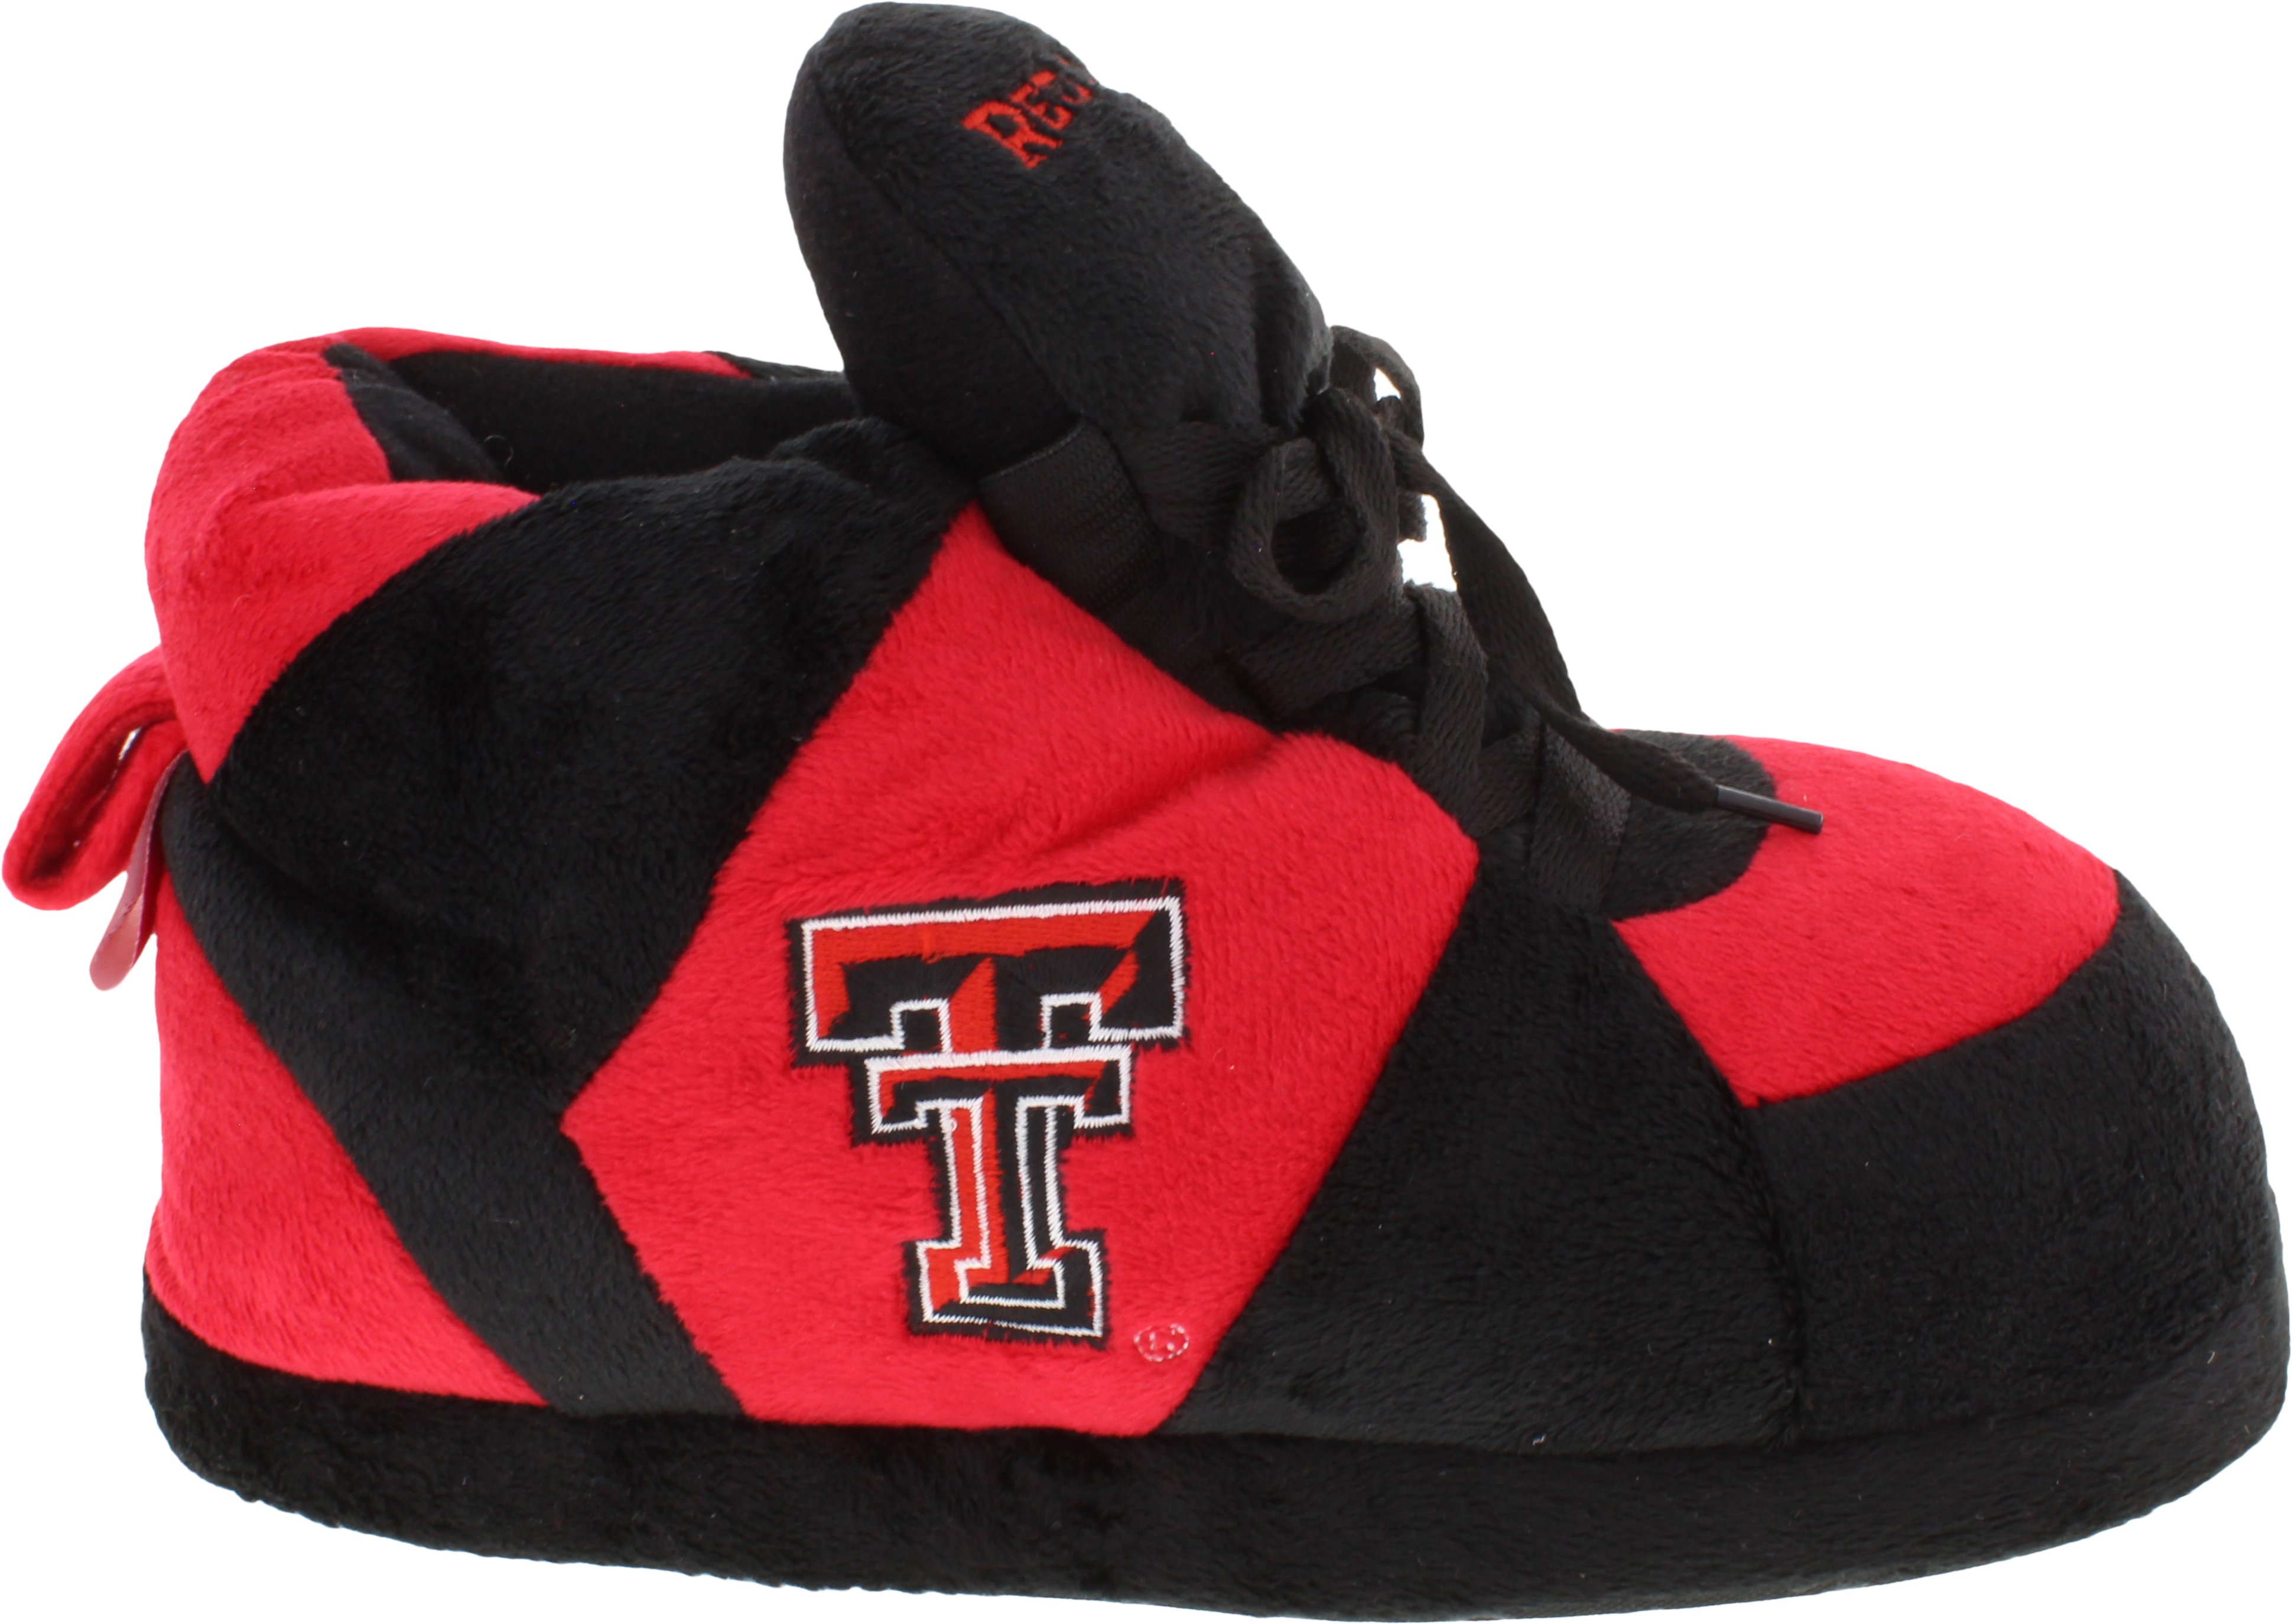 Texas Tech Red Raiders Original Comfy Feet Sneaker Slipper, X-Large - image 1 of 5